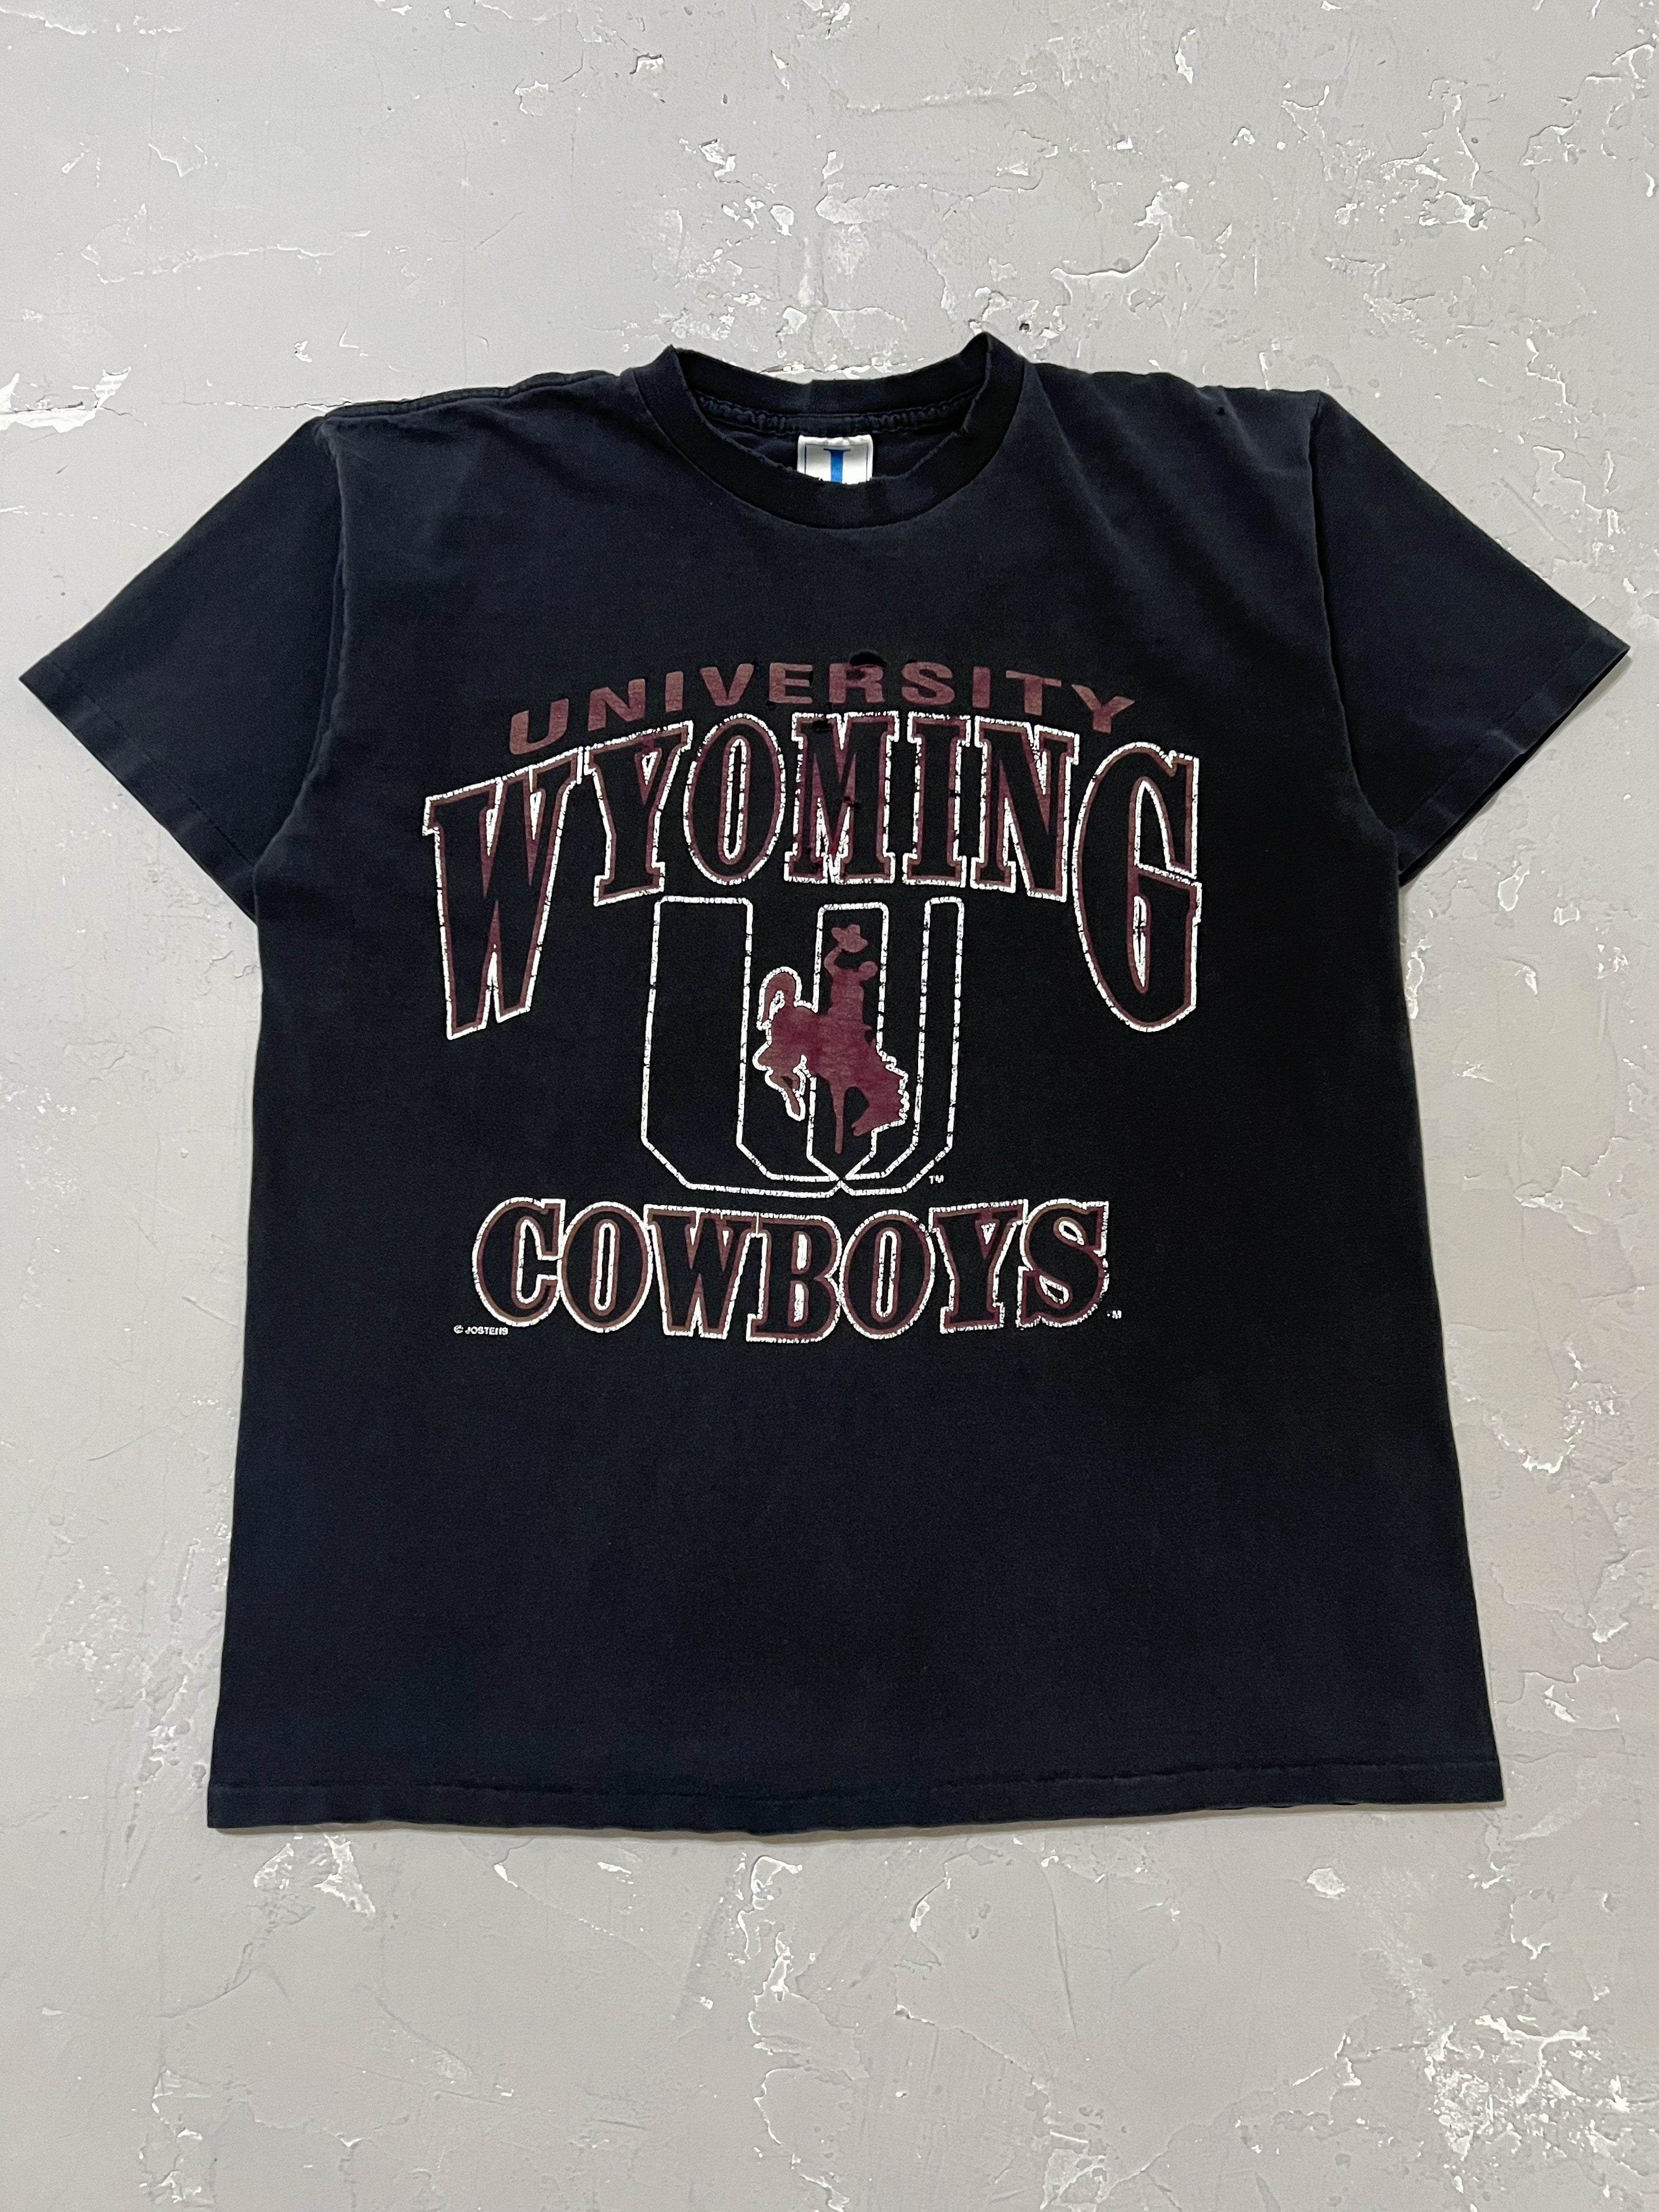 1990s Faded Black Wyoming Cowboys Tee [M]